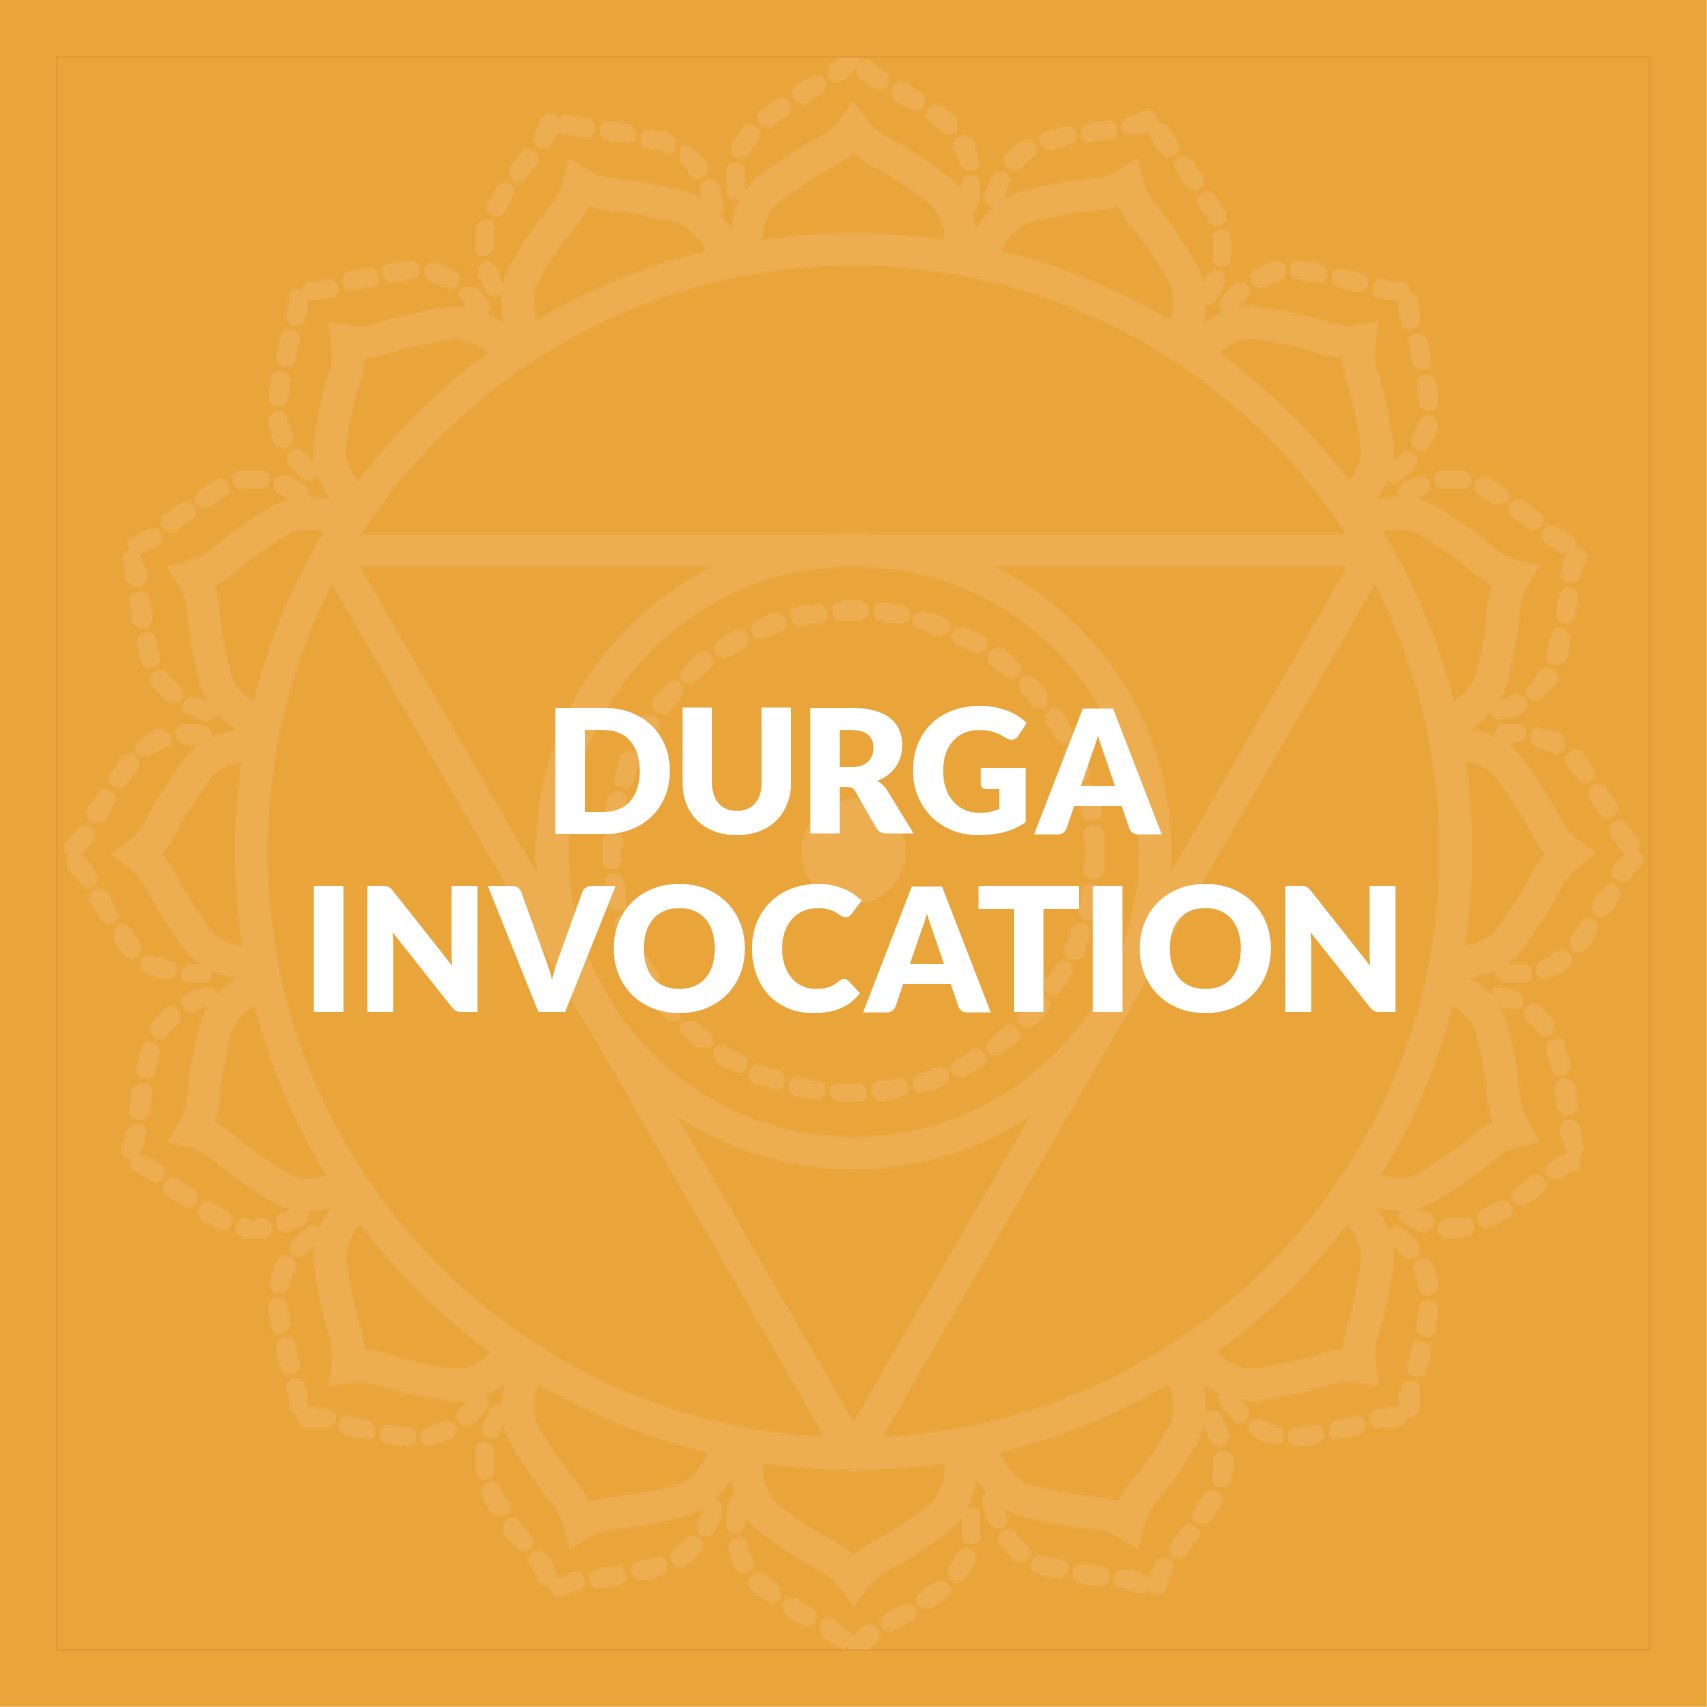 Durga Invocation